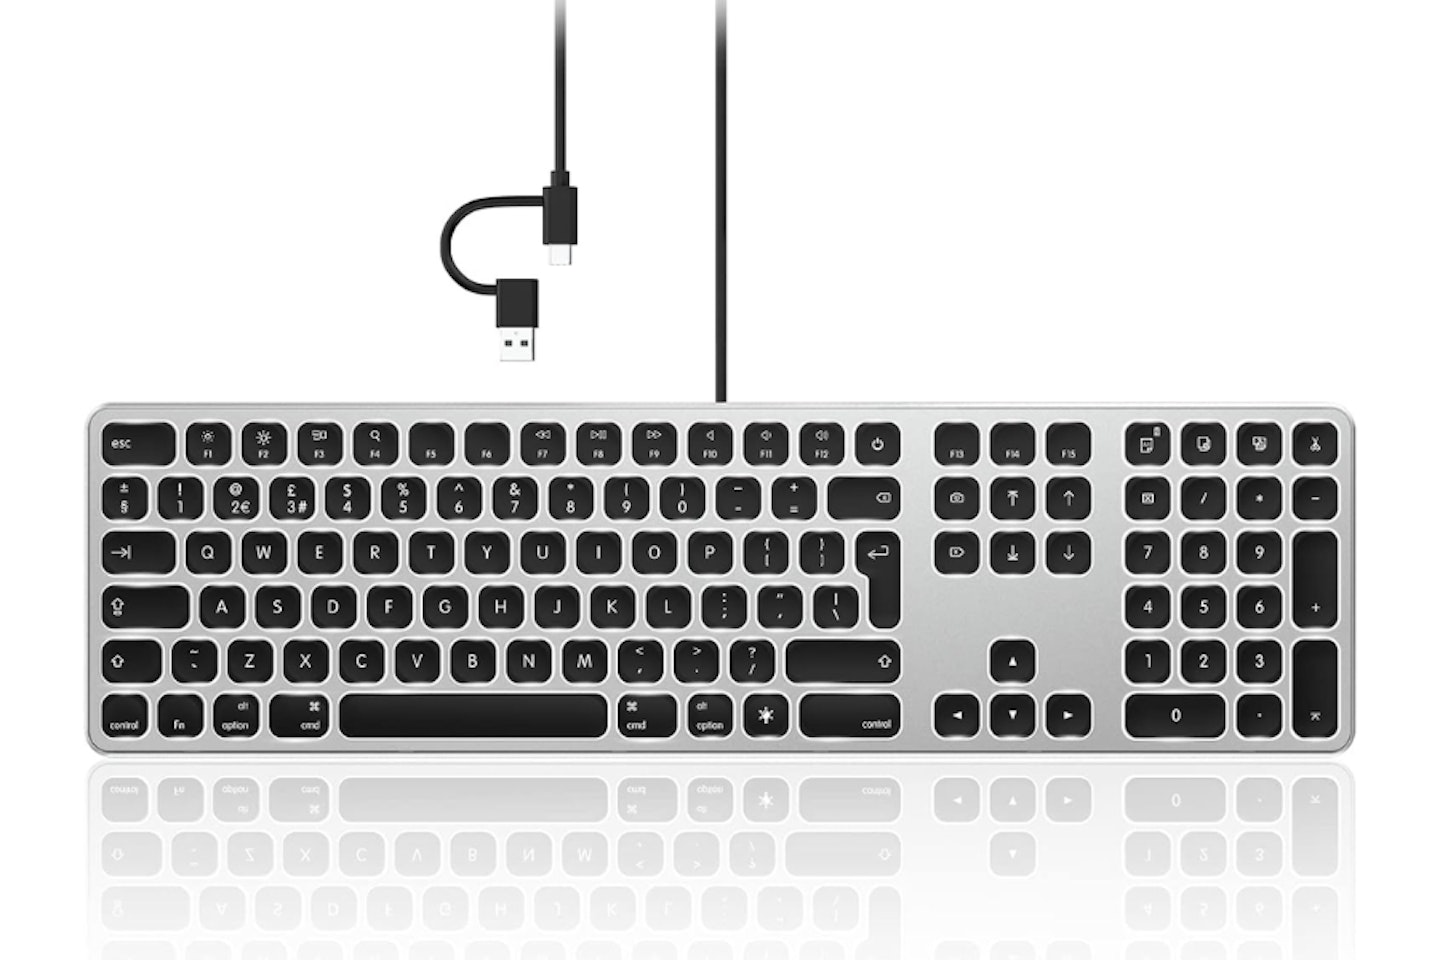 Seenda Wired Backlit Keyboard for Mac OS  - possibly the best keyboard for Mac